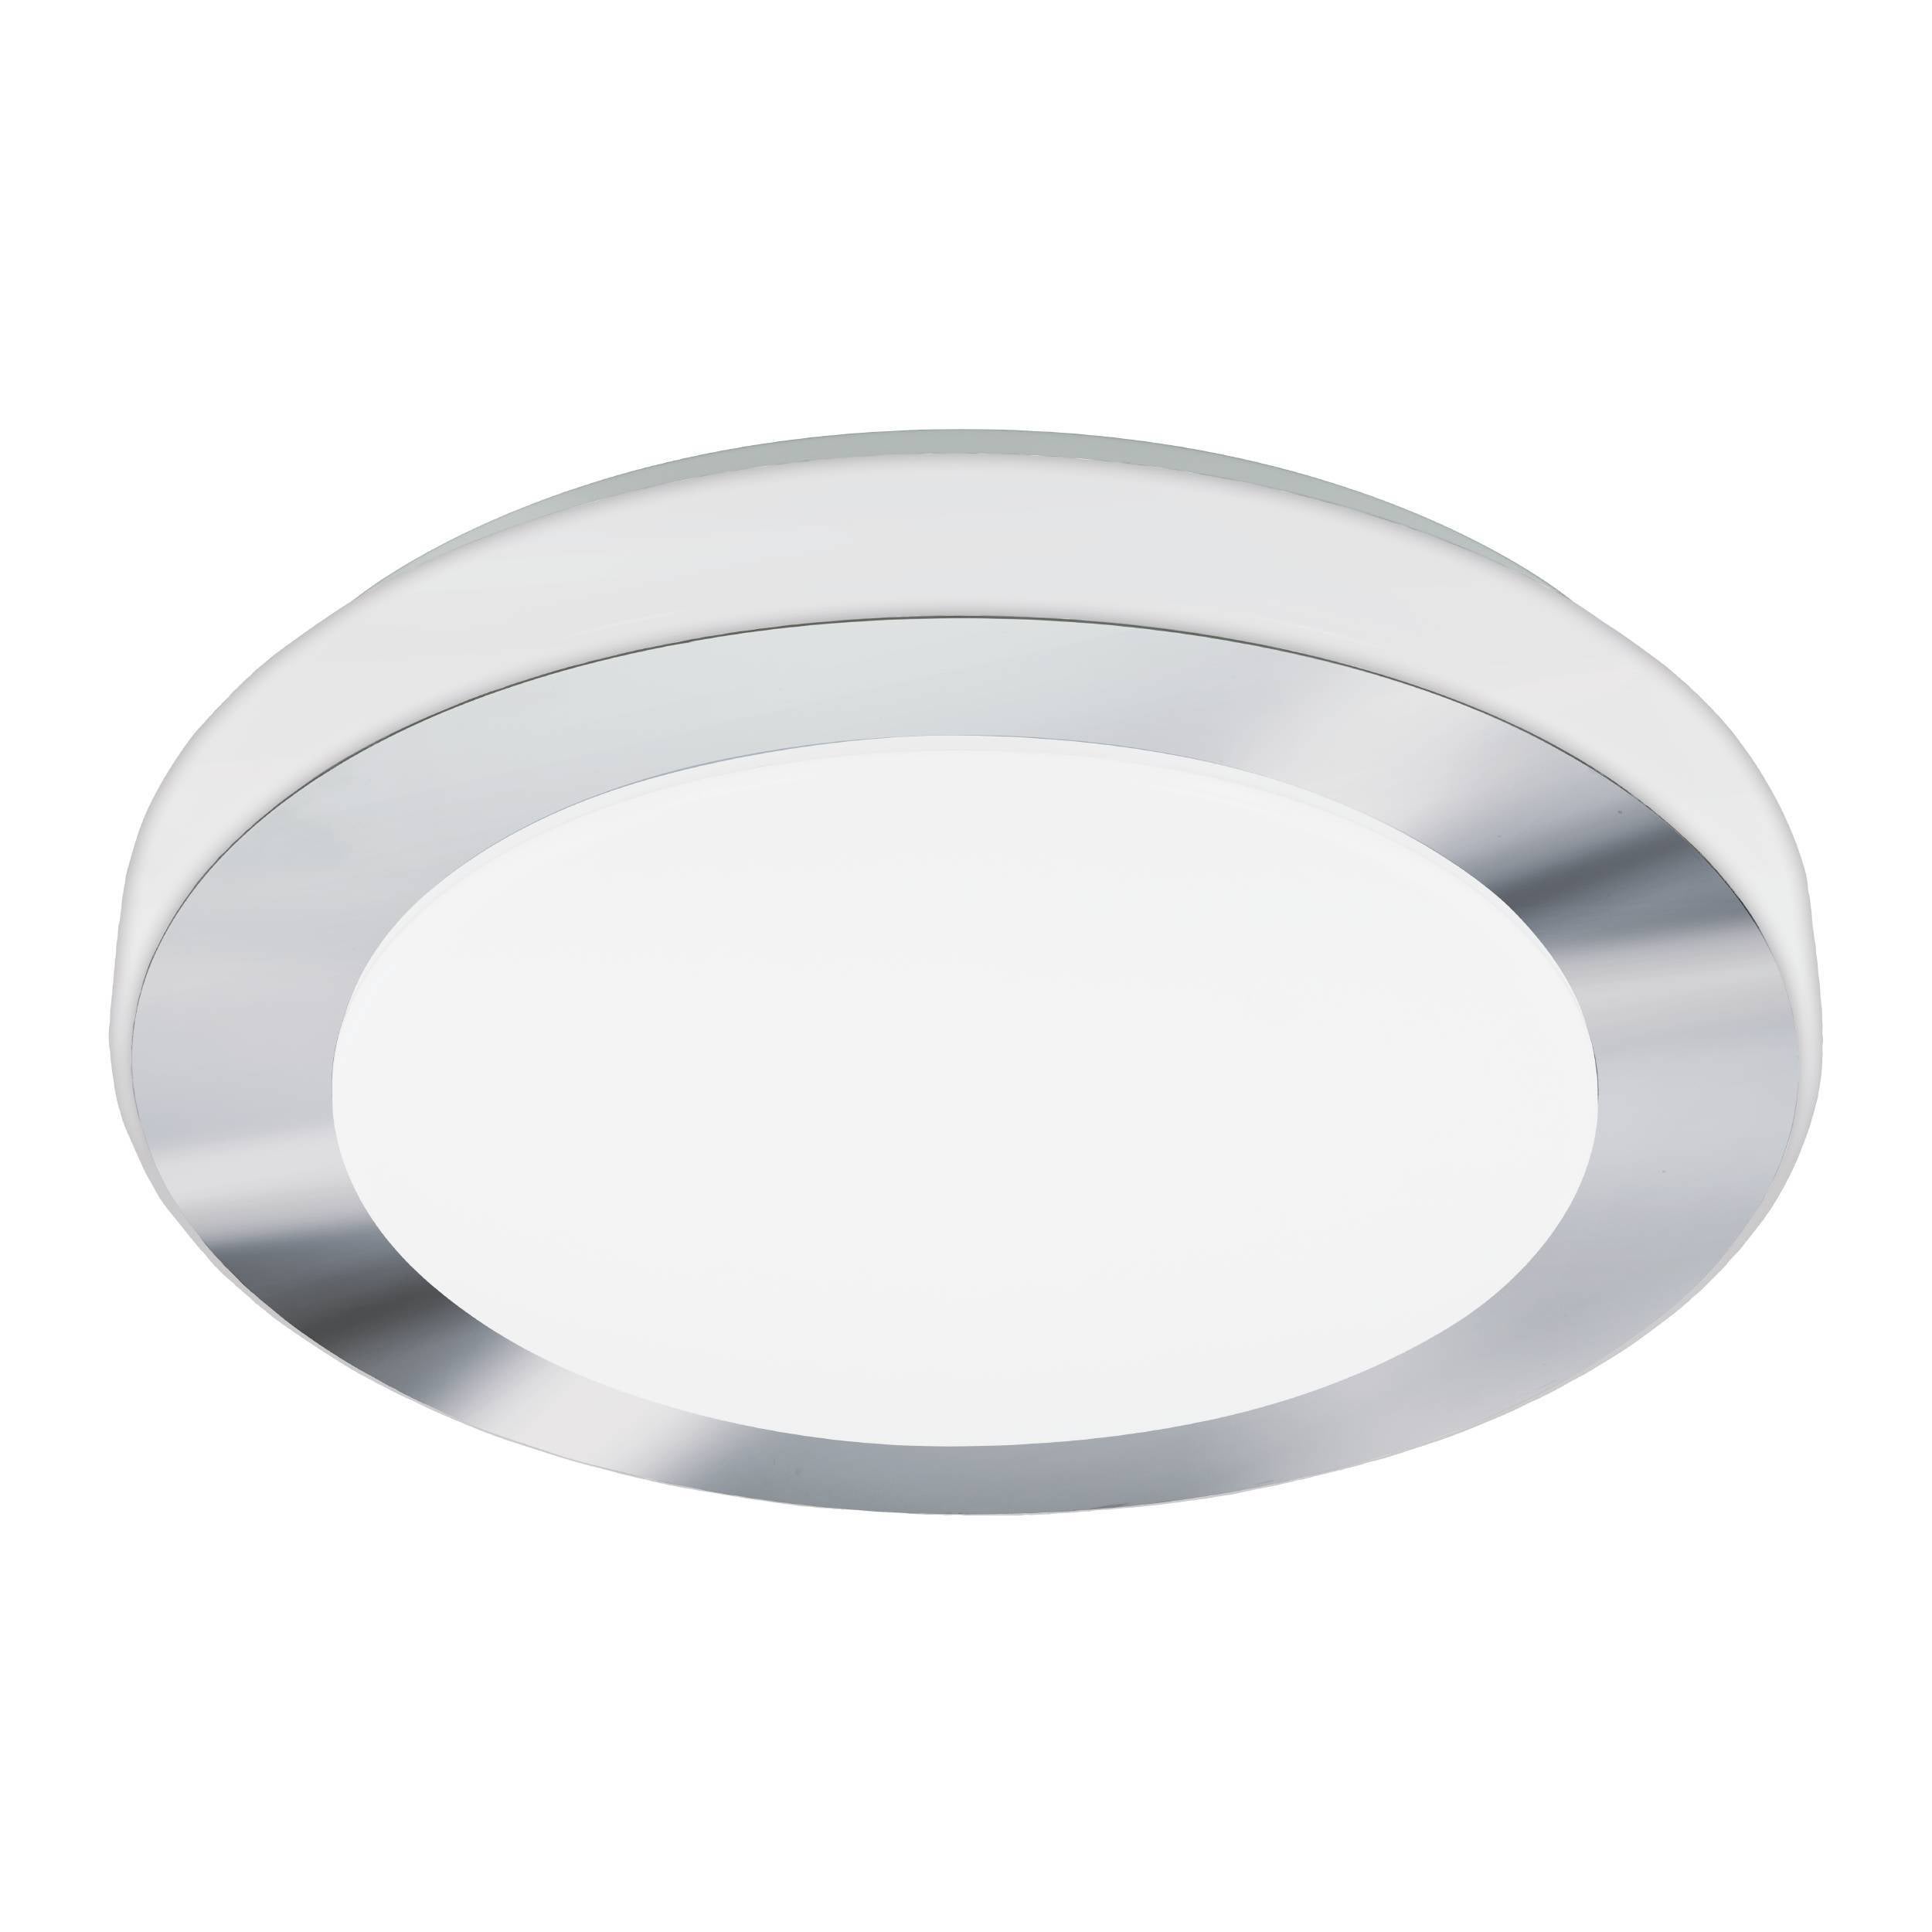 EGLO Carpi LED Round Ceiling Light | Dunelm